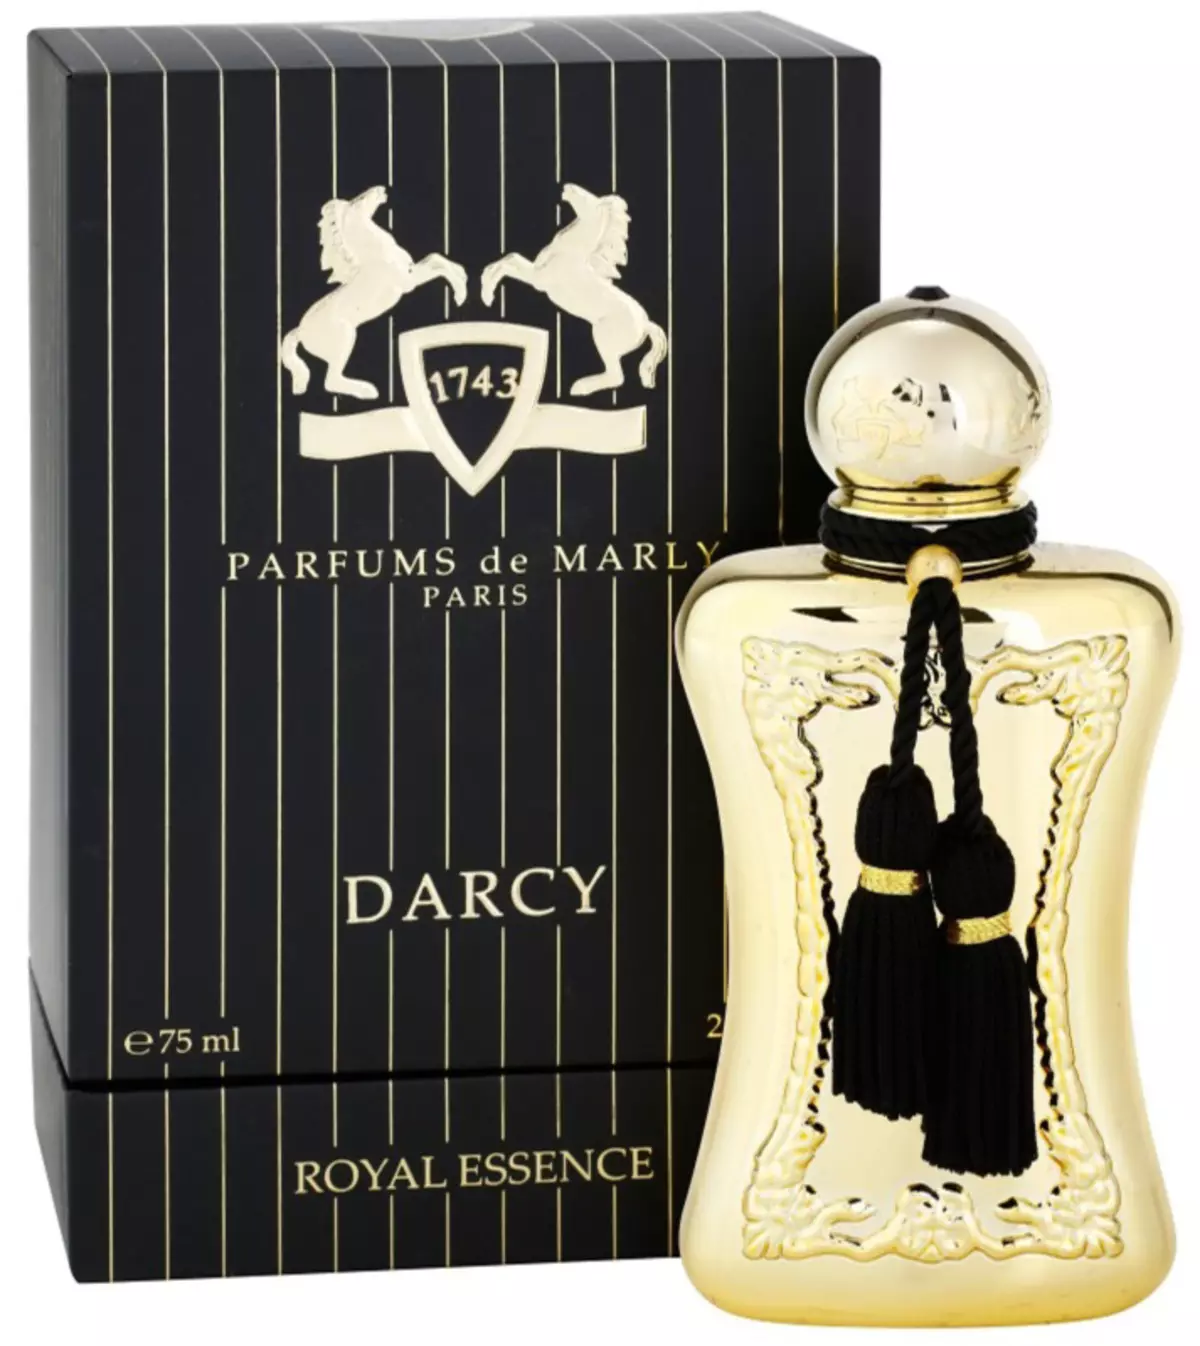 Parfums de marly perfumes: delina, మెలియర్ మరియు లేటన్, హేరోదు మరియు డార్లీ, కాస్సిలి మరియు ఇతర ఆత్మలు, ఎంపిక ప్రమాణాలు, సమీక్షలు 25169_34